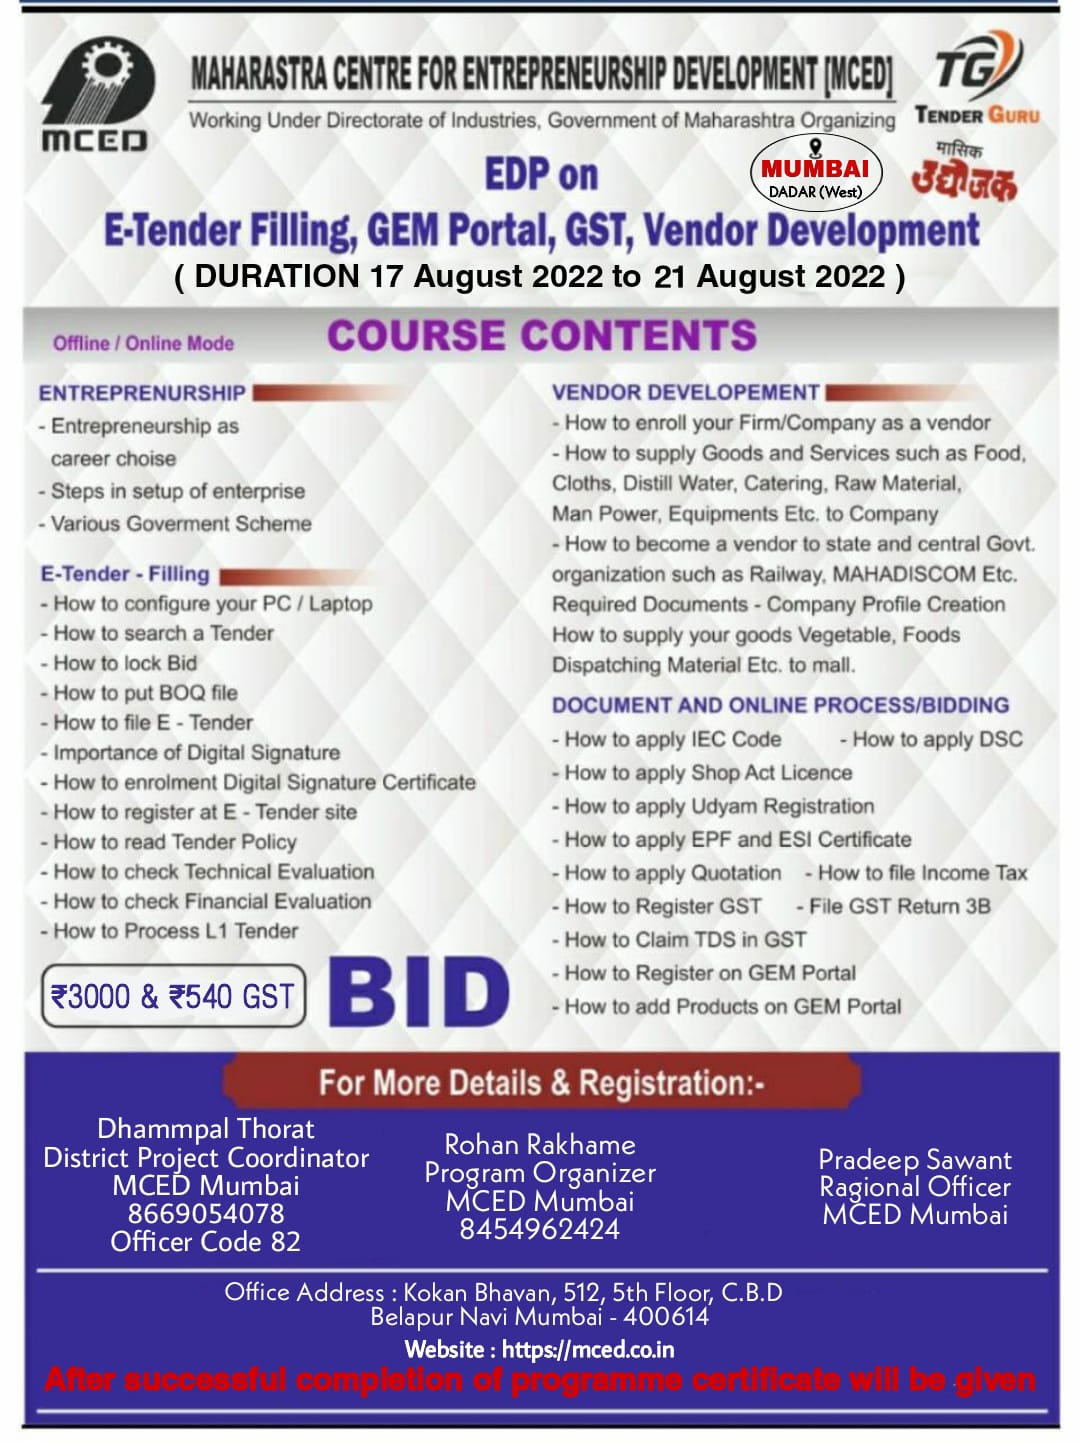 E-Tender Filling, GeM Portal, GST & Vendor Development